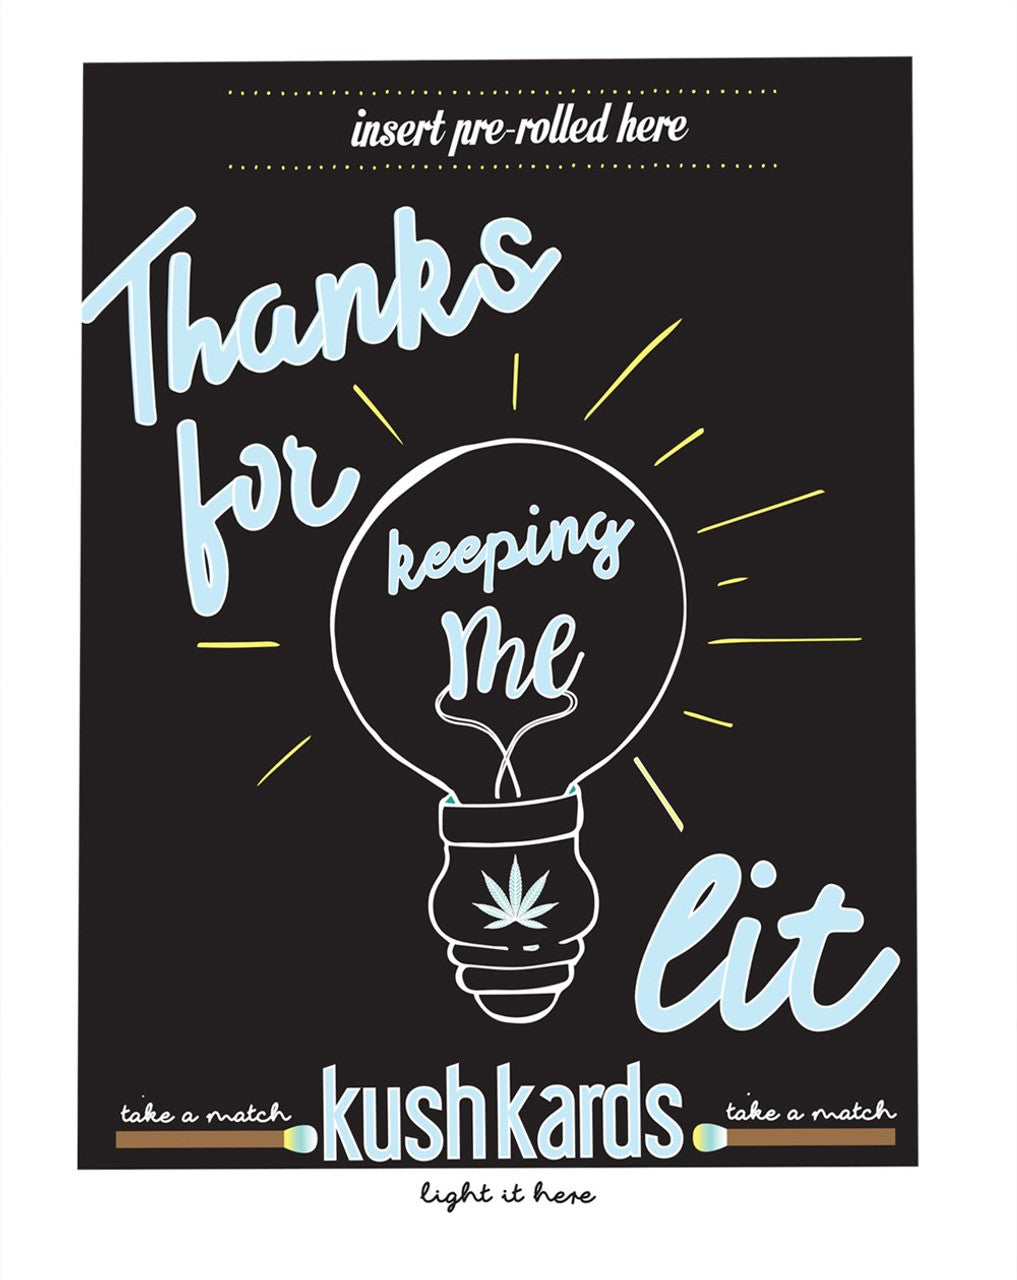 KushKards-Thanks For Keeping Me Lit